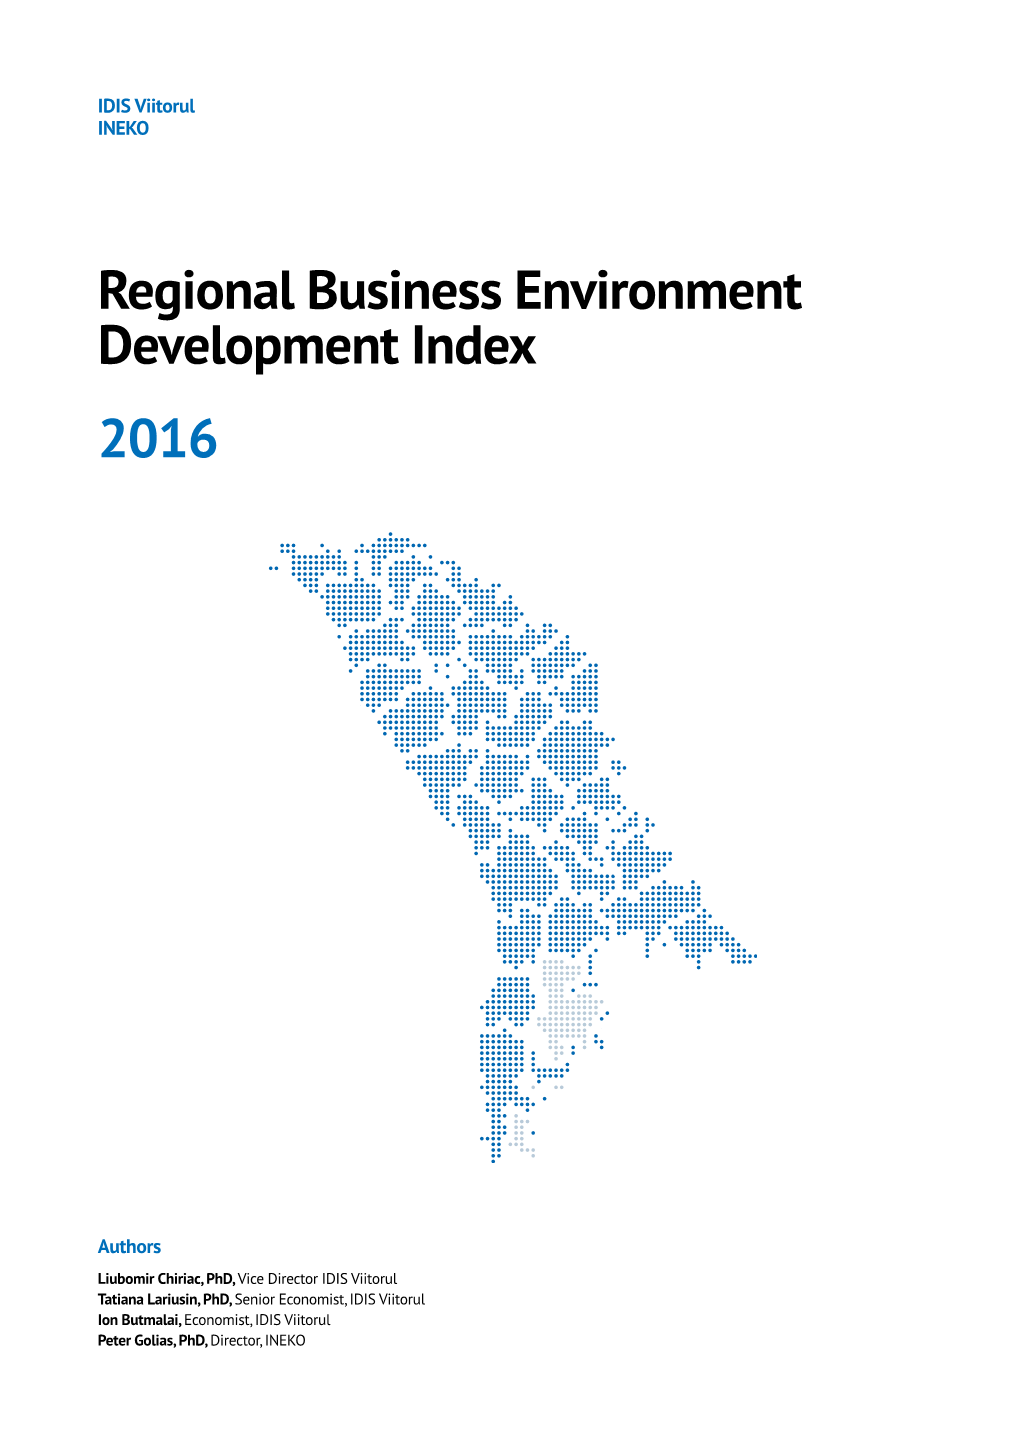 Regional Business Environment Development Index 2016